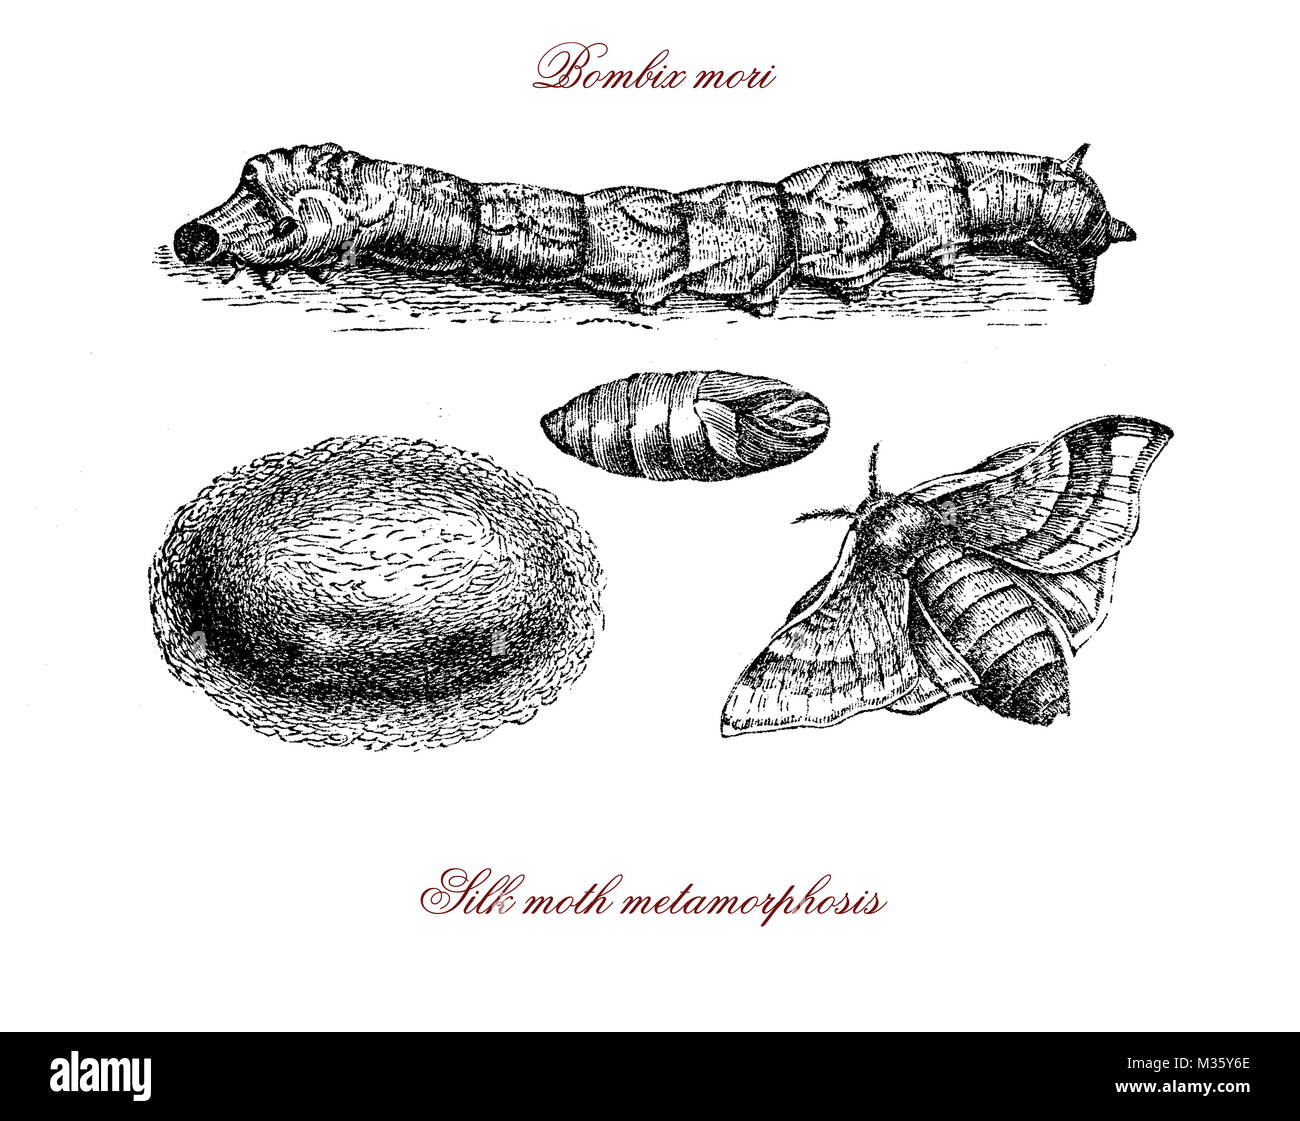 Bombix mori, silkworm, cocoon, silk moth metamorphosis vintage engraving Stock Photo